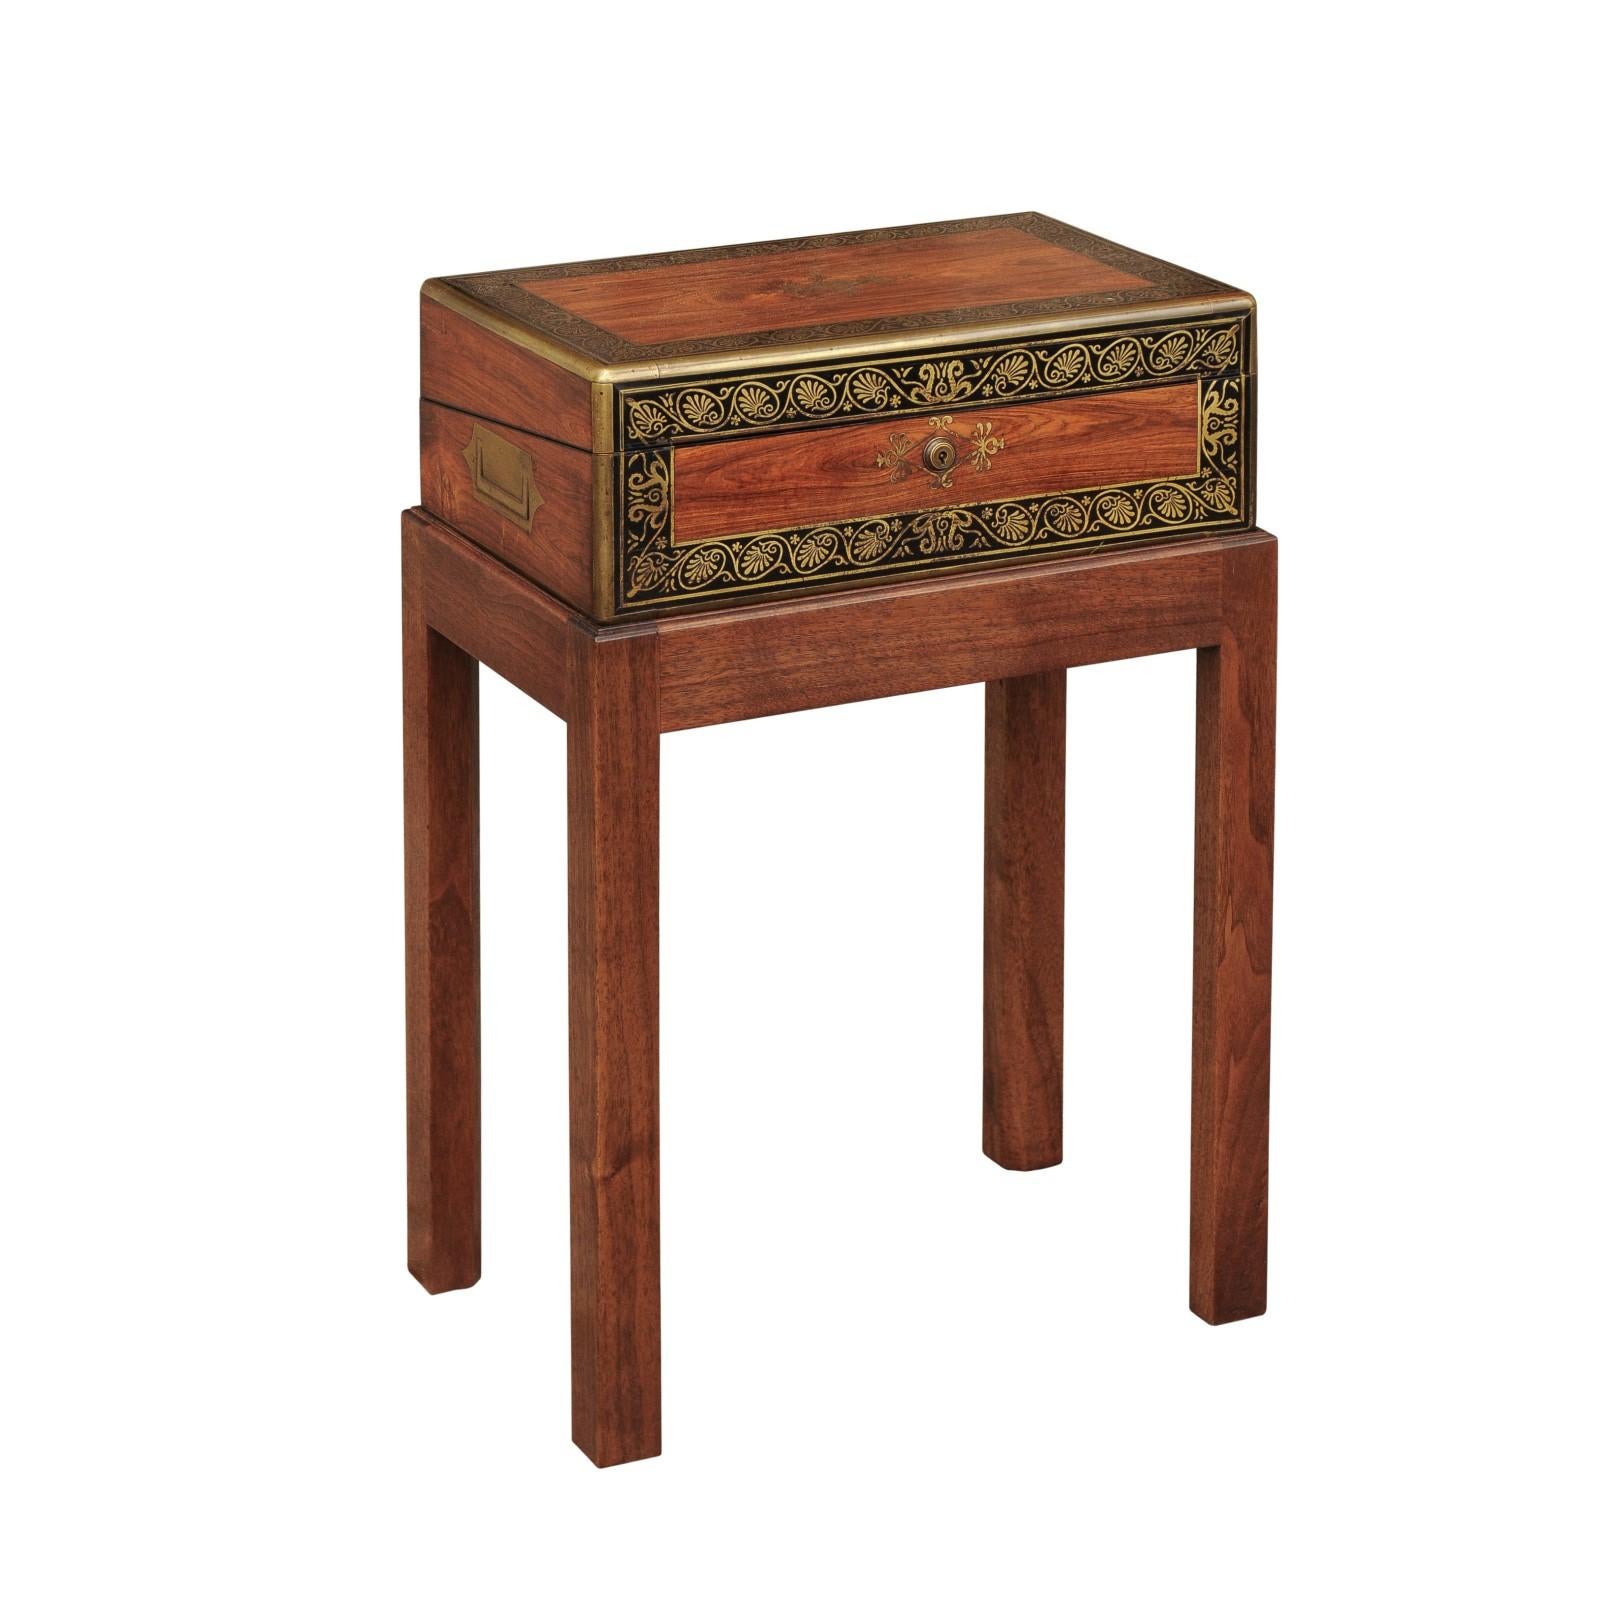 English Mahogany Lap Desk circa 1870 with Gilded Accents and Custom-Made Base